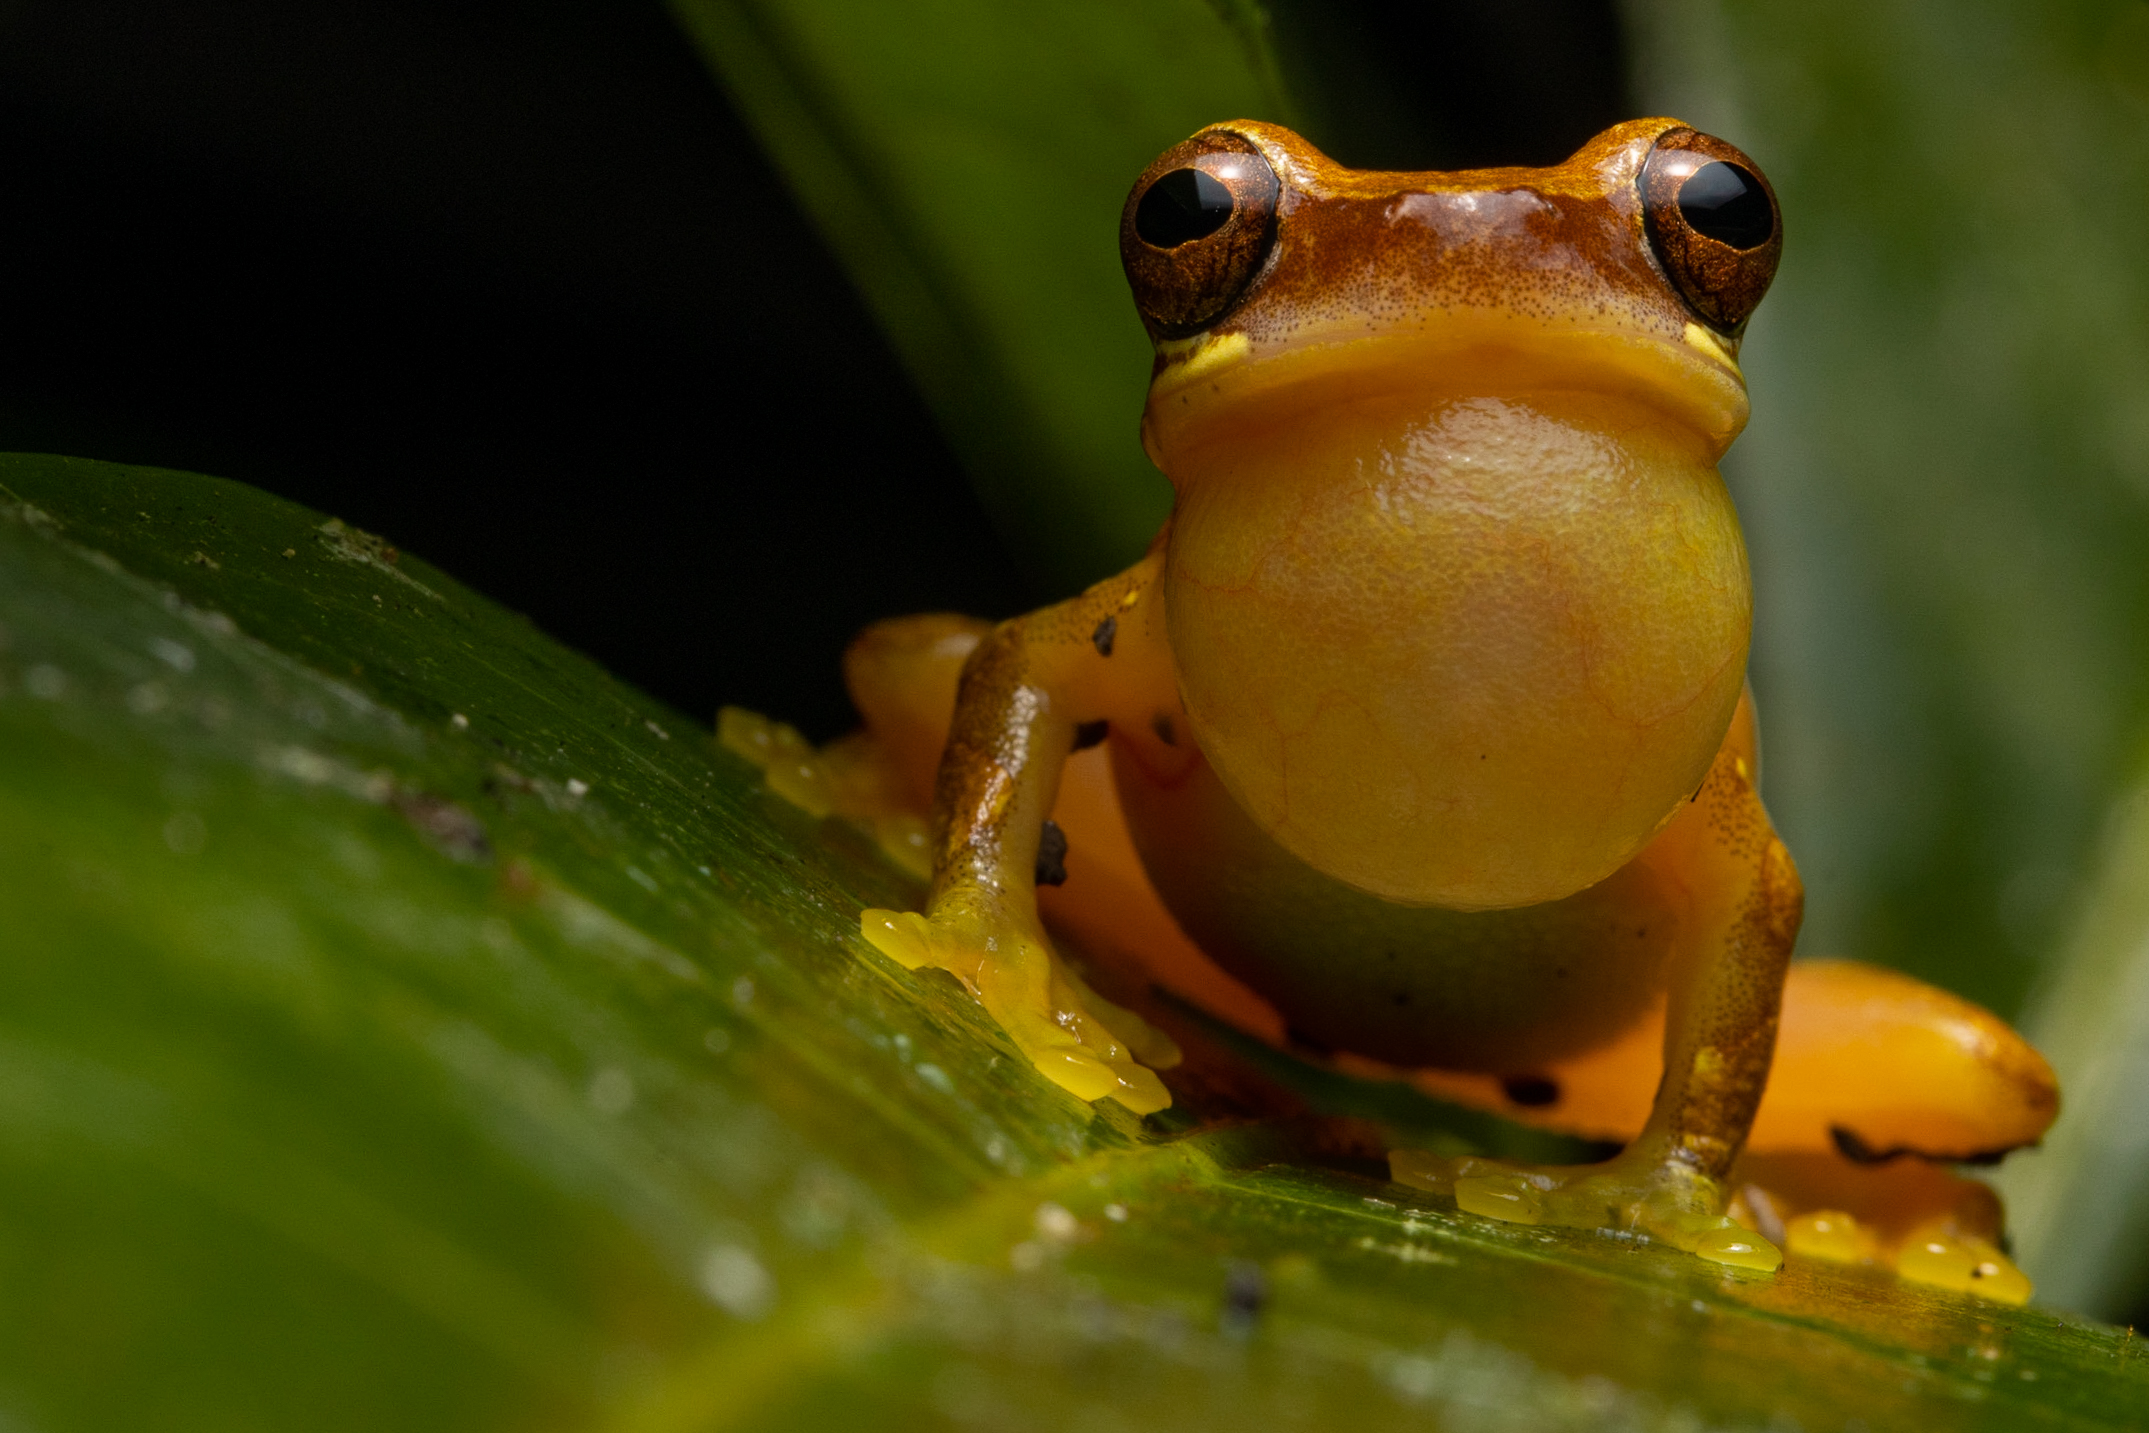 Small Headed Tree Frogs (Dendropsophus microcephalus)